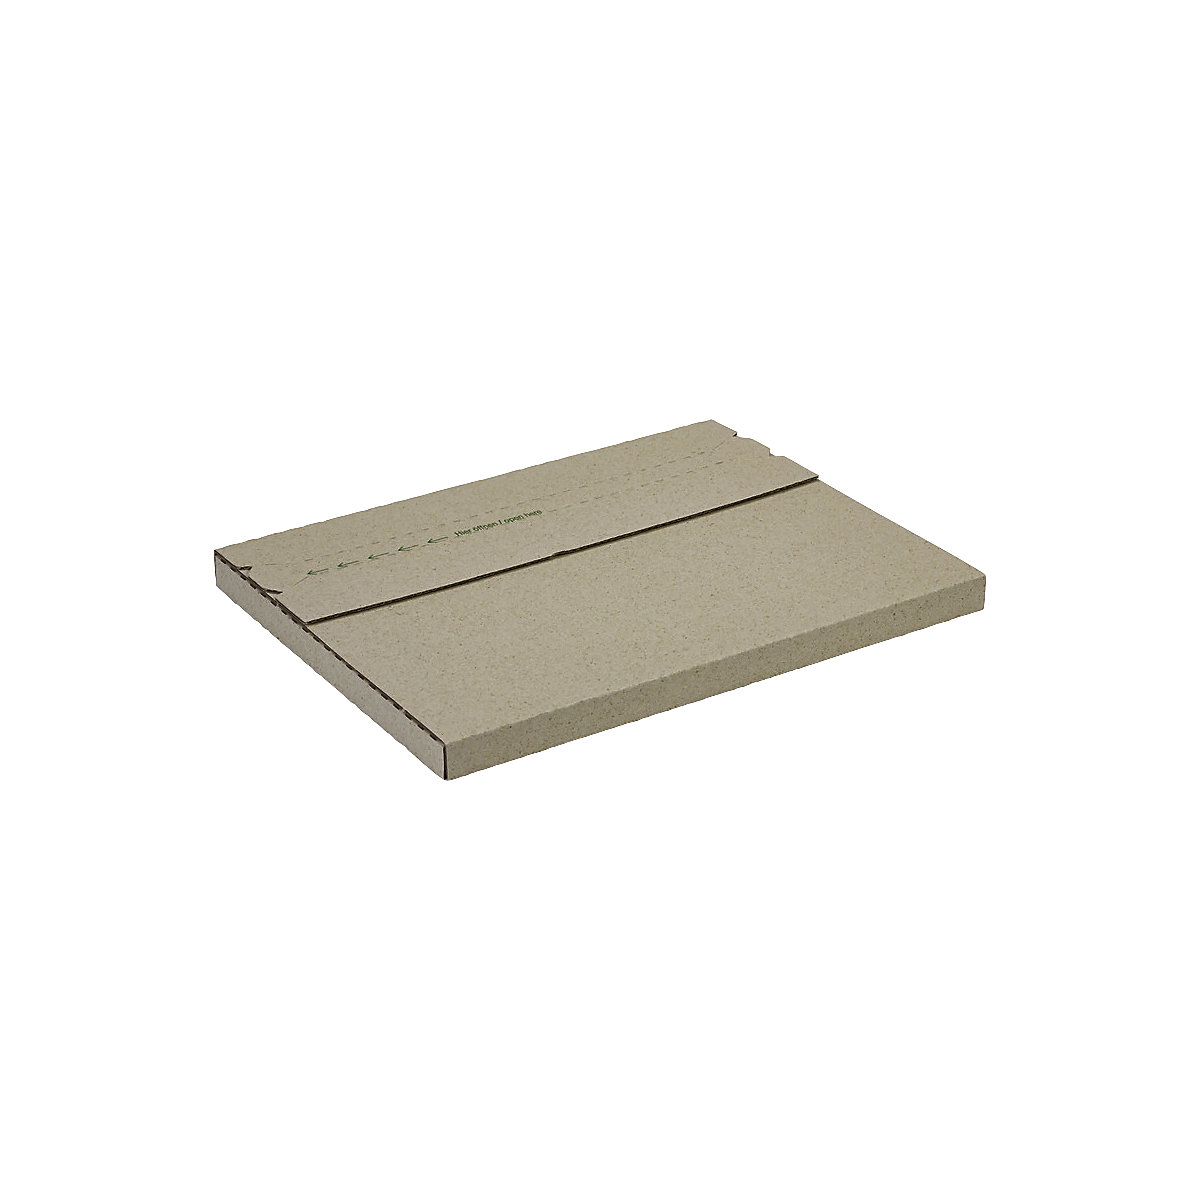 Graspapier-Flachpack terra, selbstklebend, Innen-LxBxH 257 x 207 x 13 mm, ab 30 Stk-2